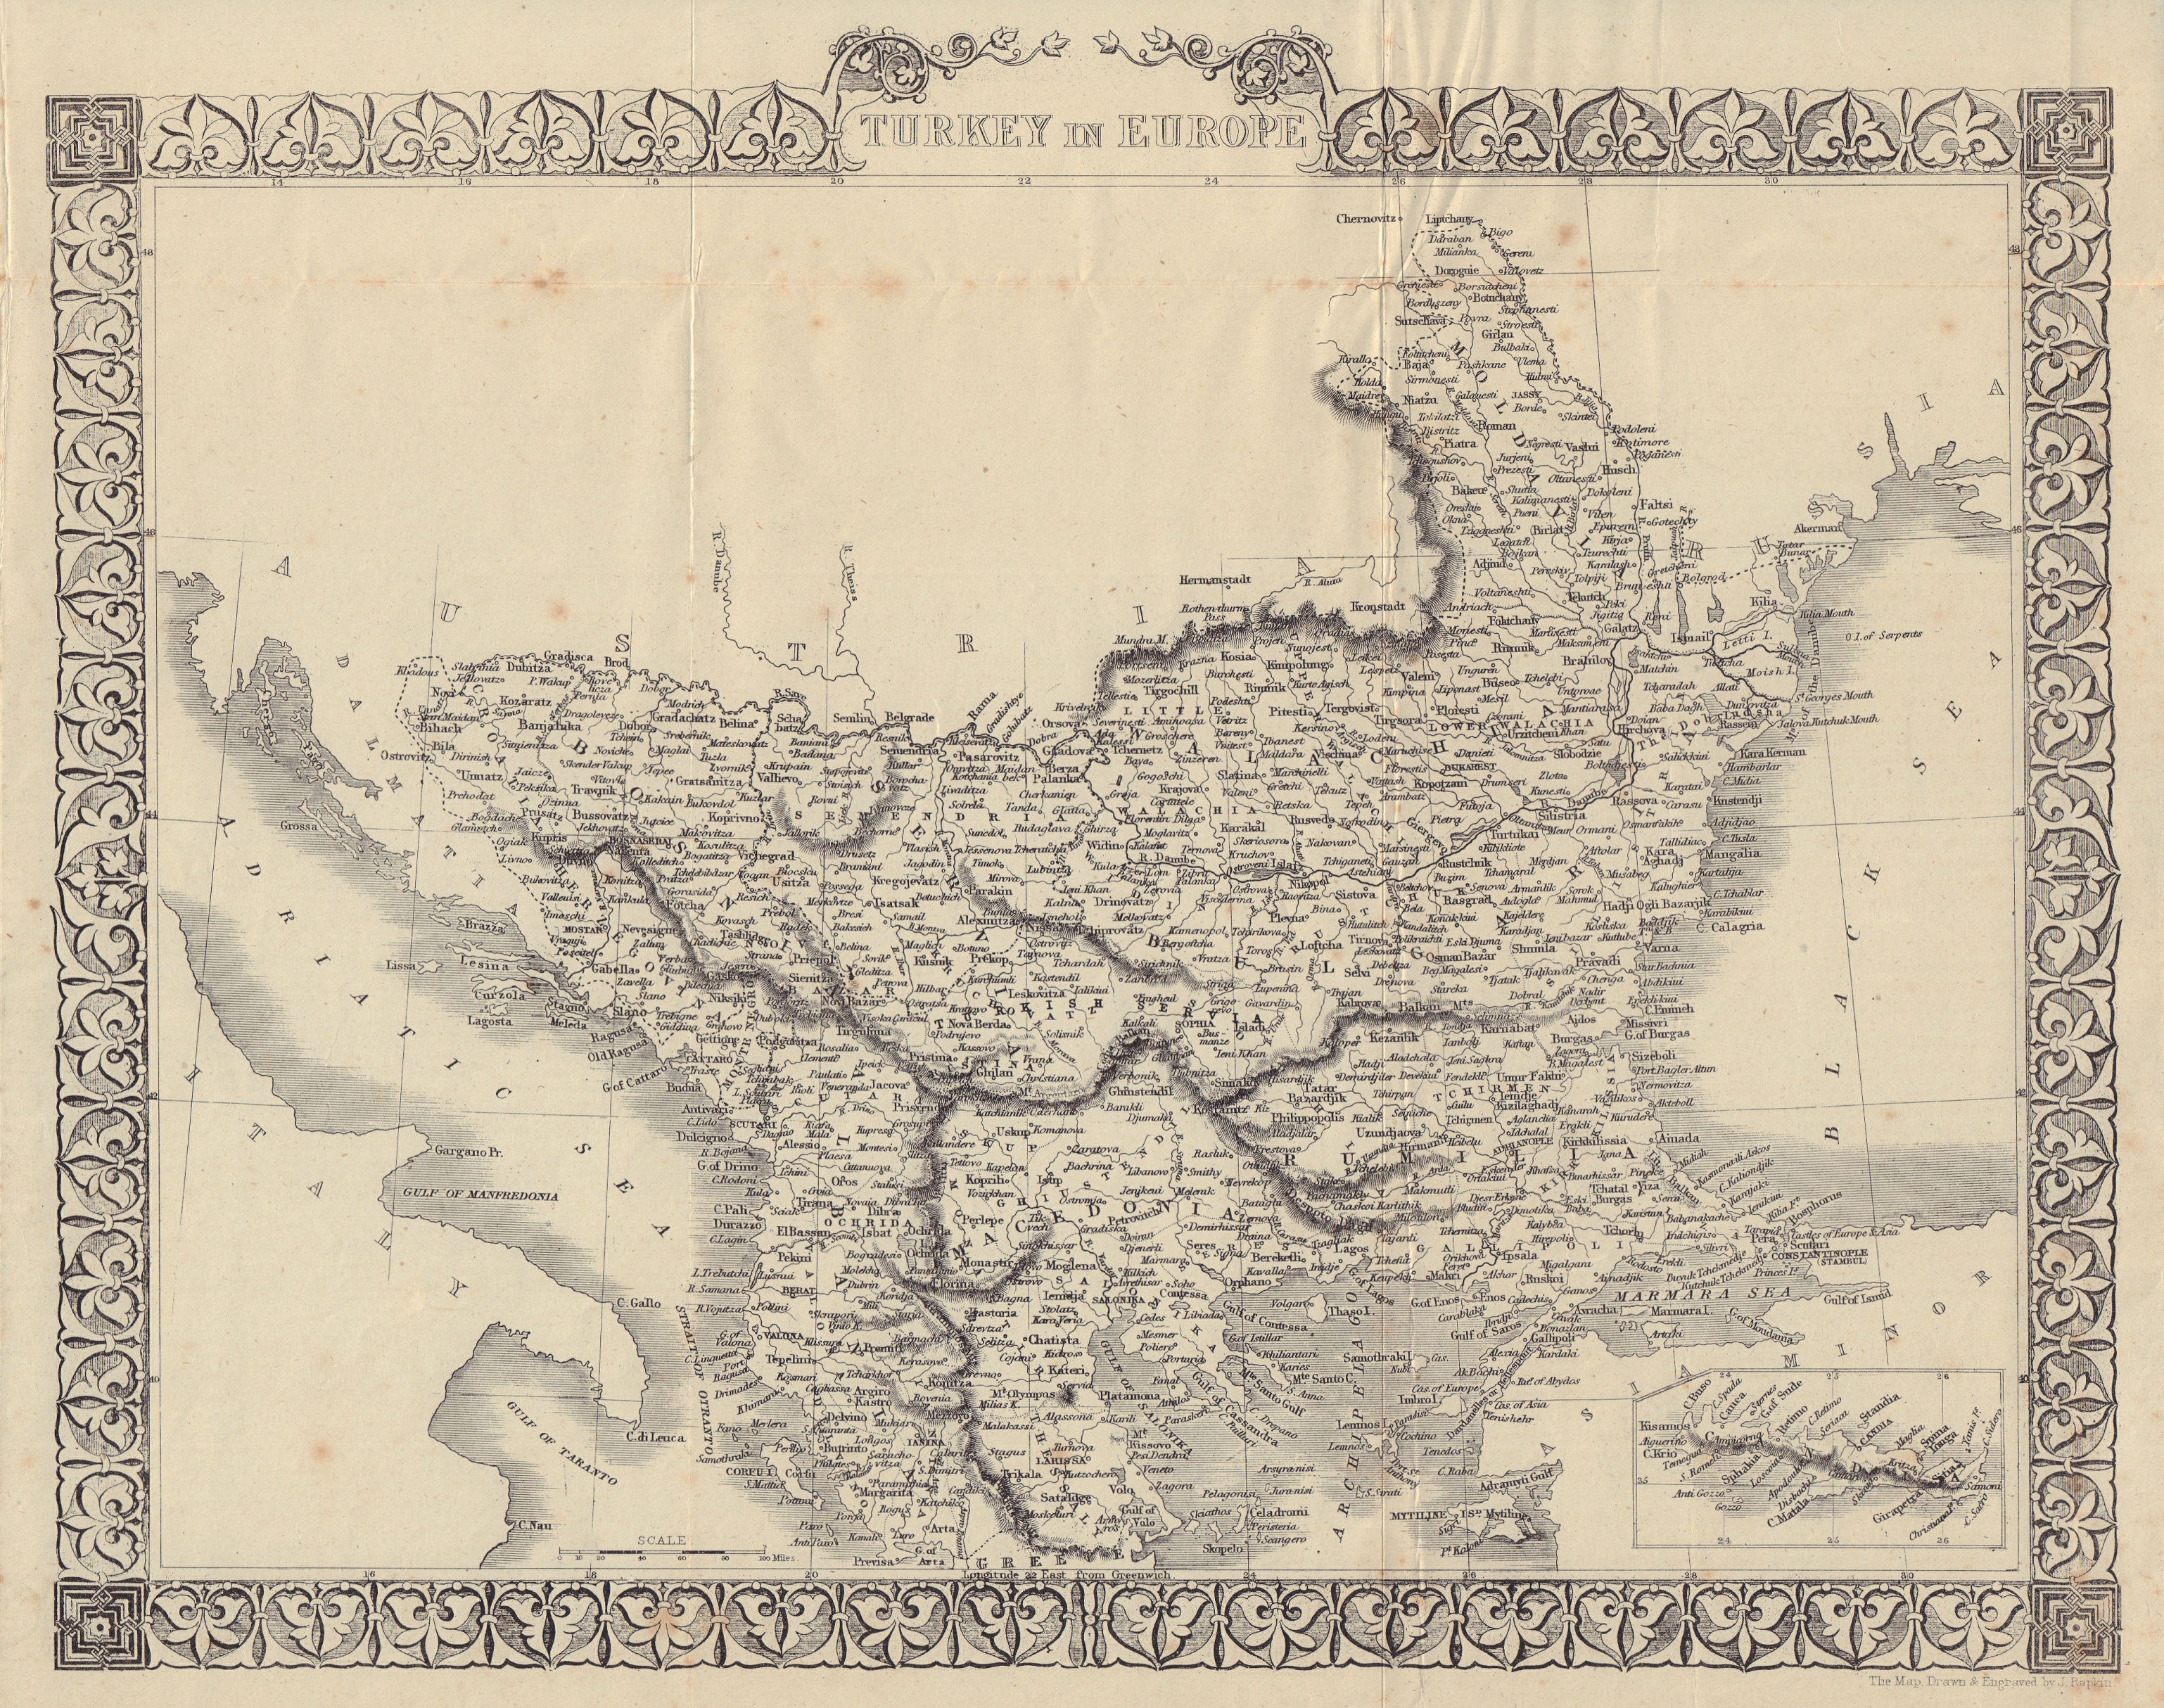 Associate Product Turkey in Europe. Balkans. Scarce edition w/o vignettes. TALLIS/RAPKIN 1855 map